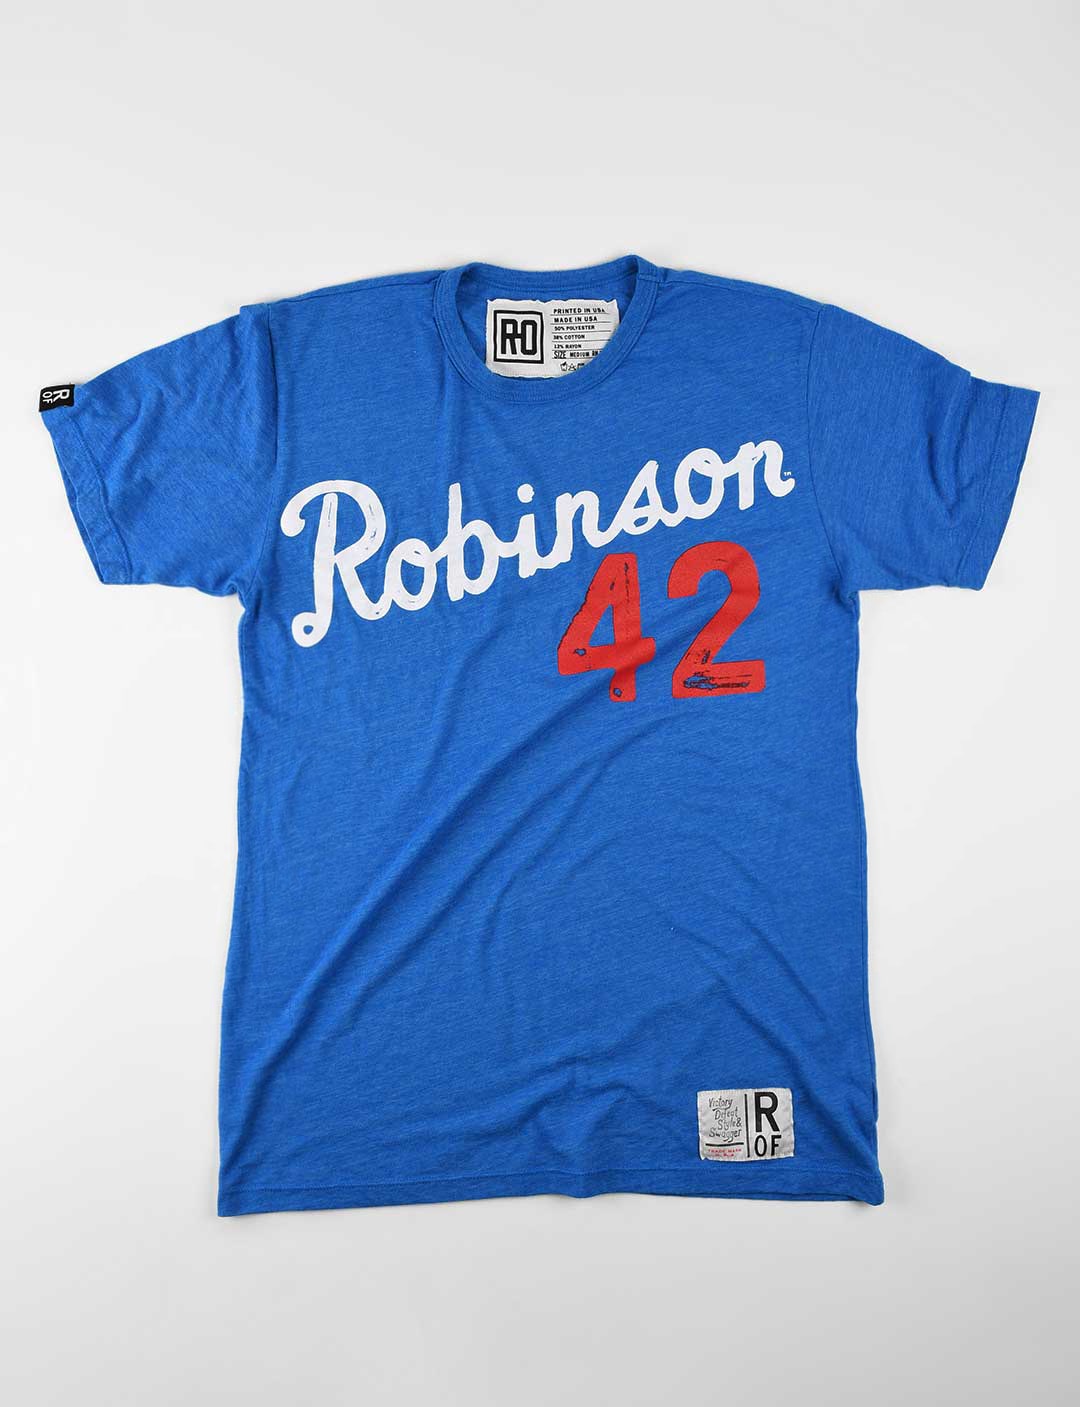 jackie robinson 42 shirt